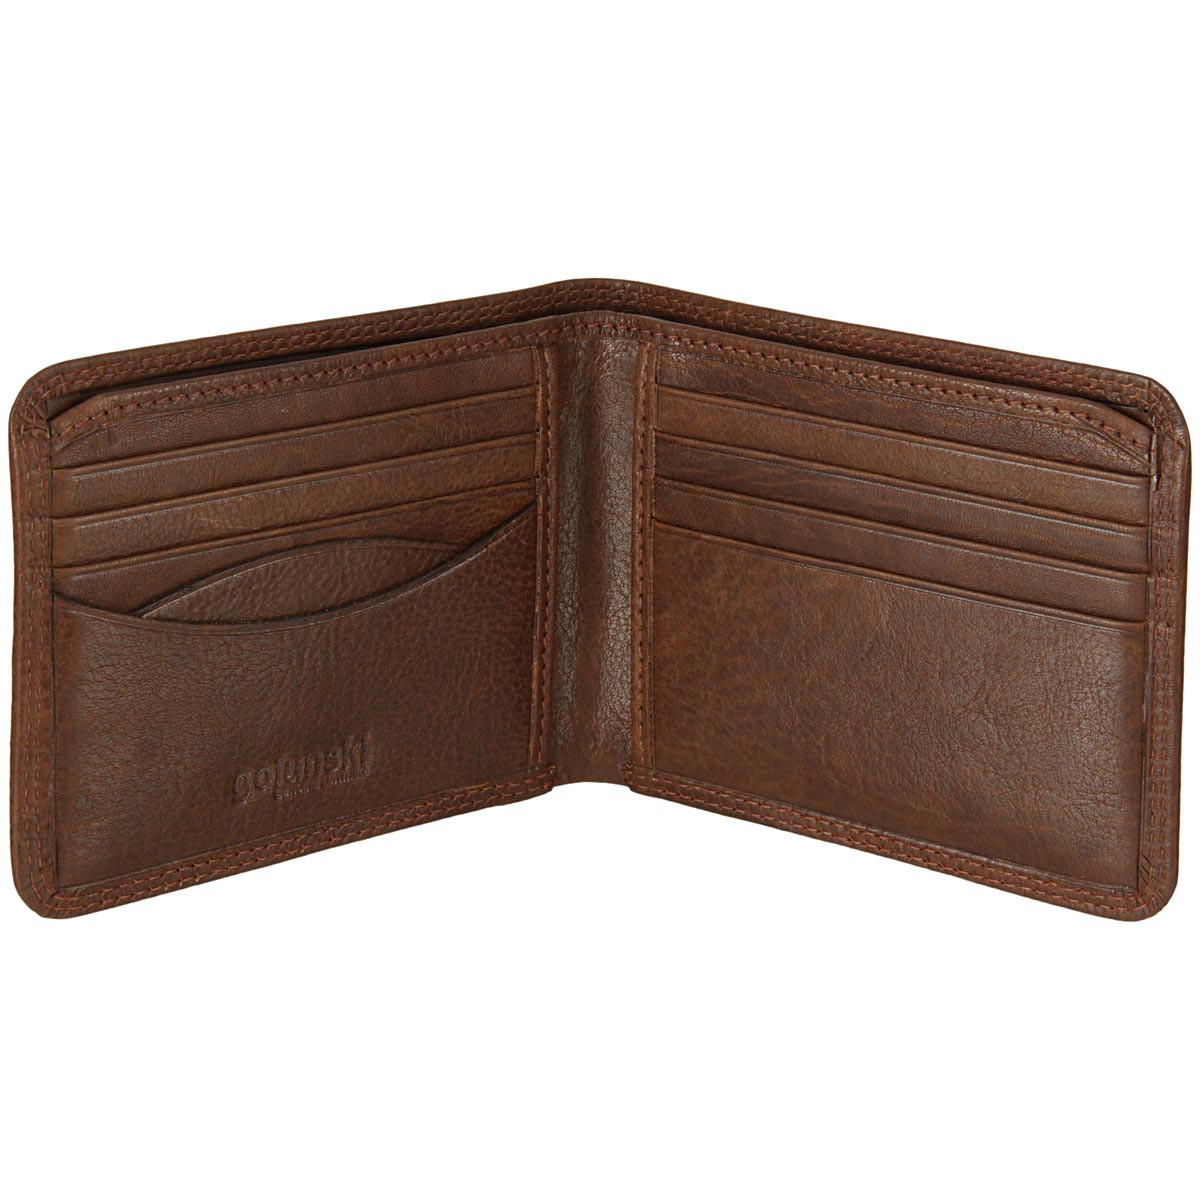 Golunski Oak Slim Soft Leather Men's Wallet 7-701 Tan